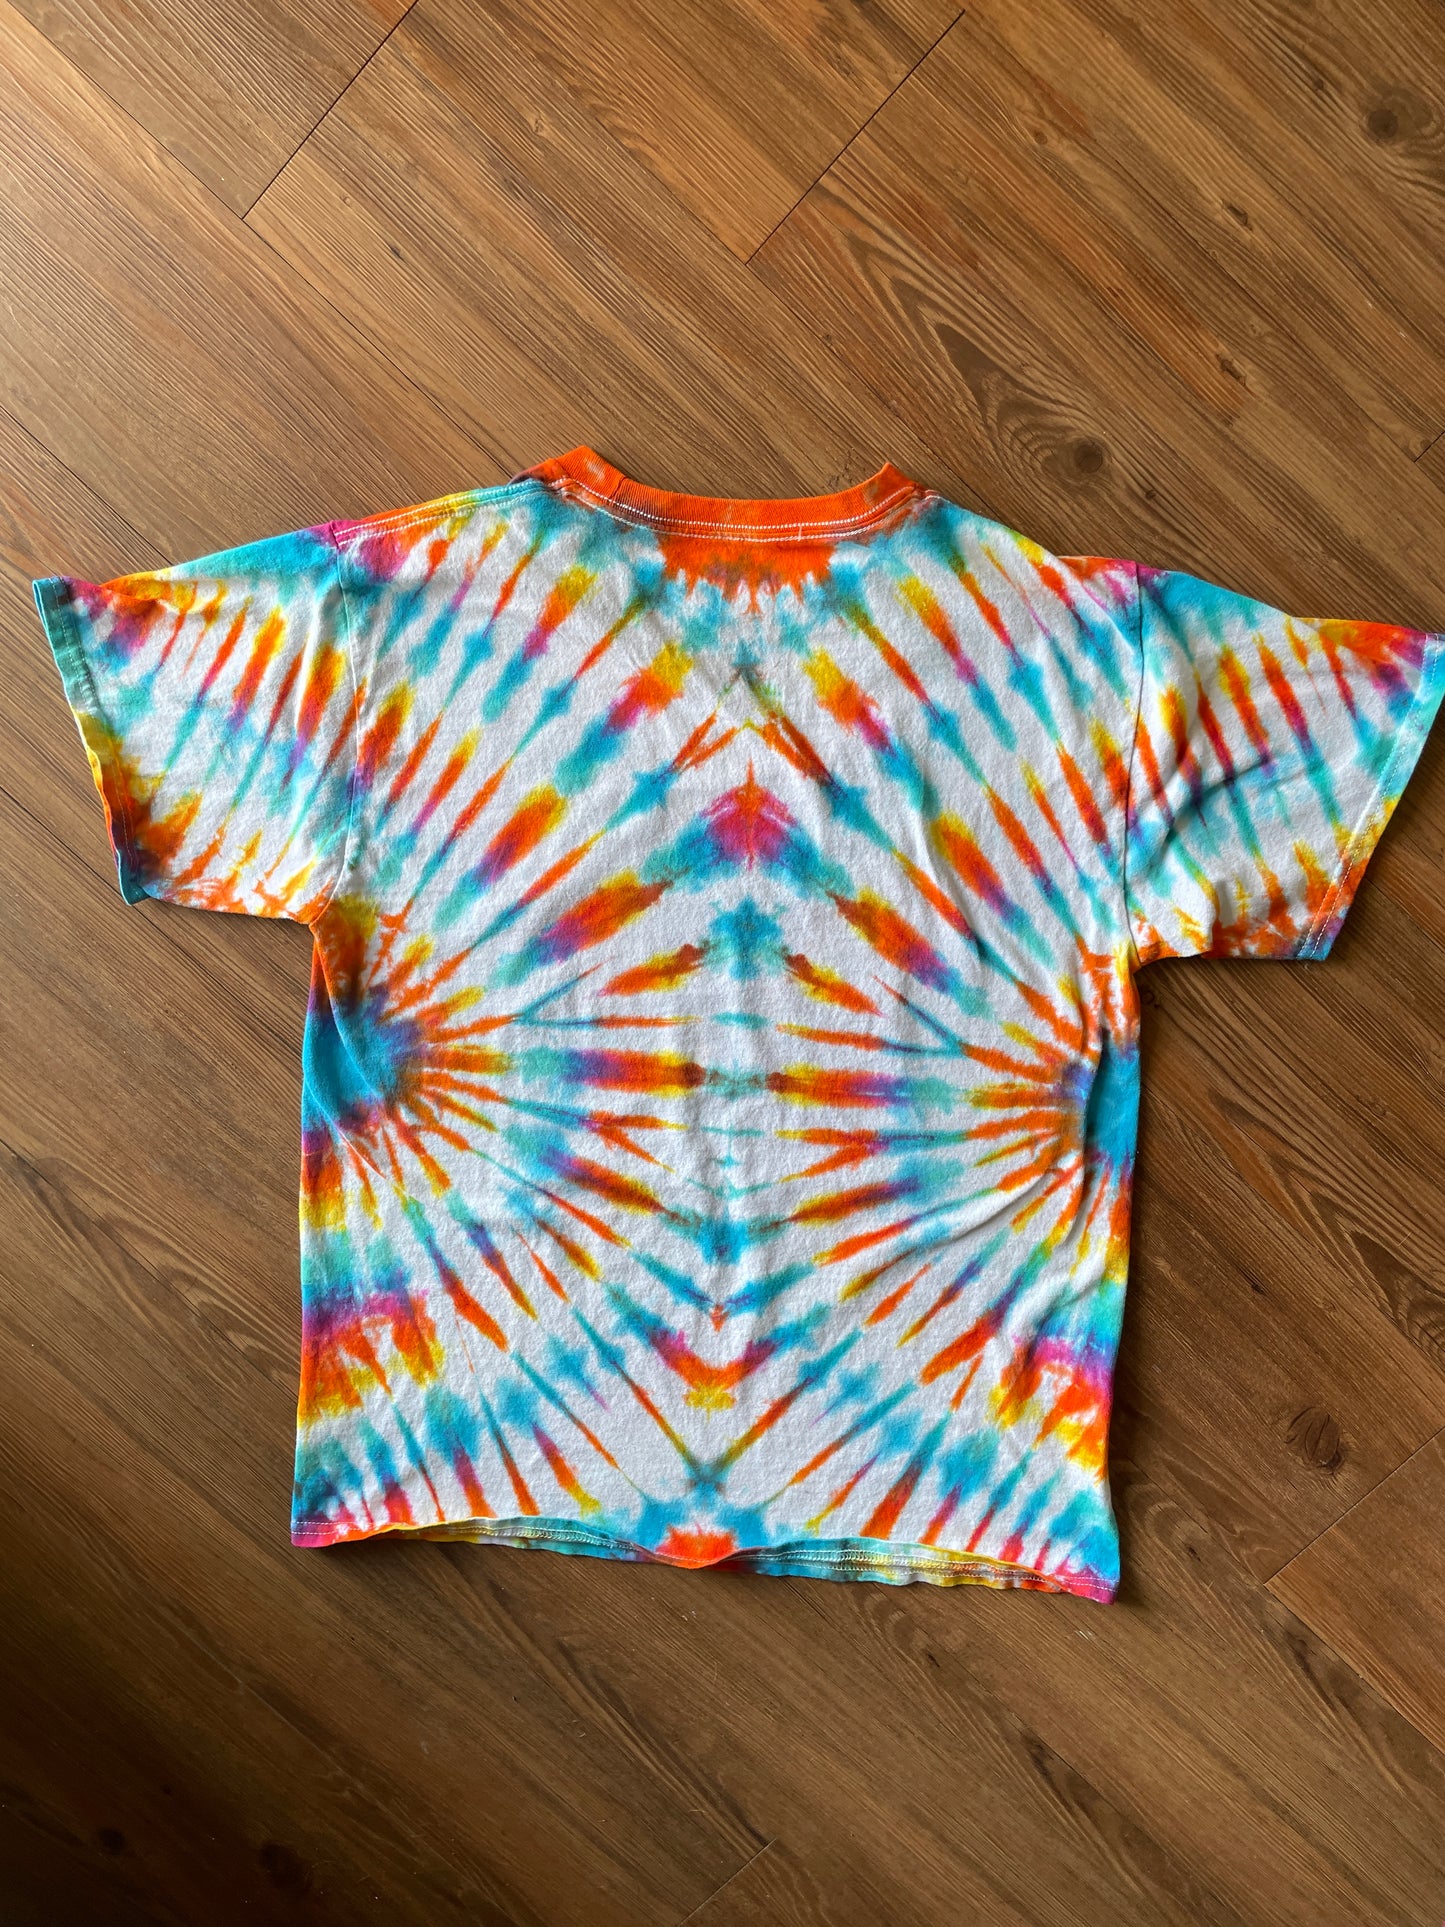 LARGE Men’s Ocean Sunshine Handmade Tie Dye T-Shirt | One-Of-a-Kind Neon Pleated Short Sleeve